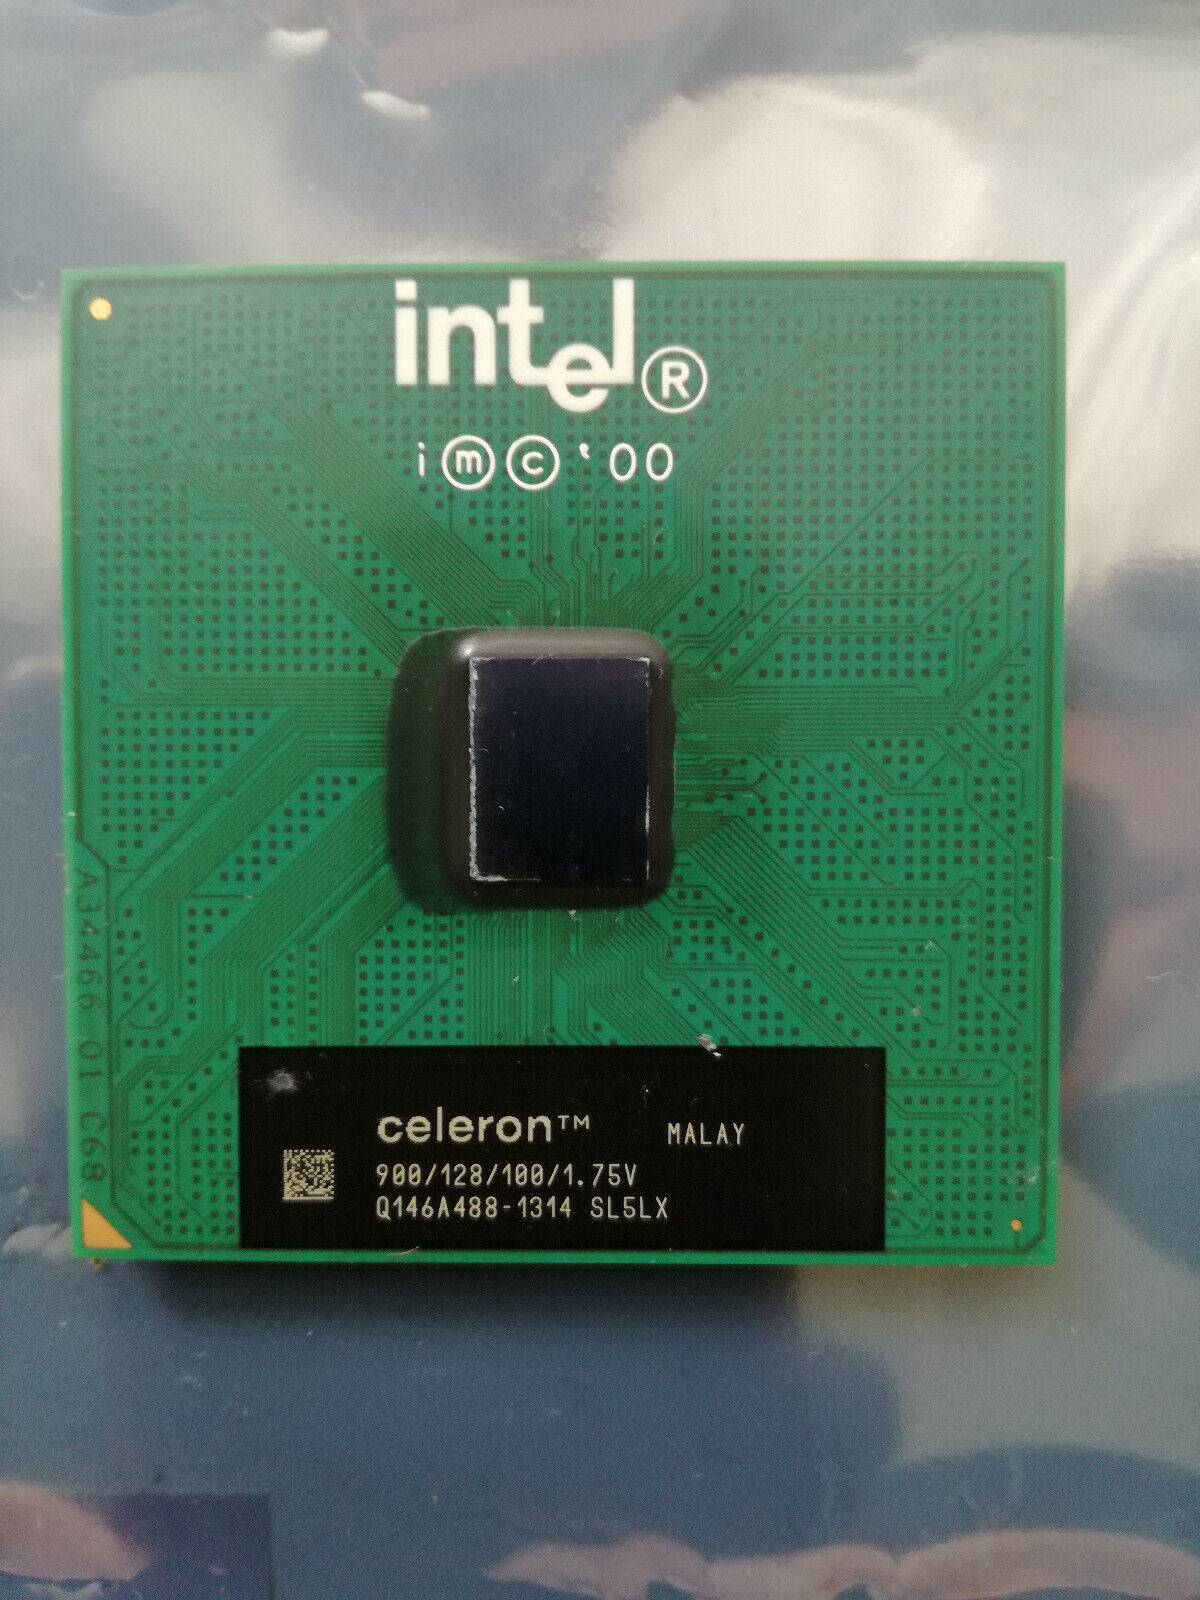 Intel Celeron 900 MHz 900/128/100/1.75V, SL5LX Socket 370